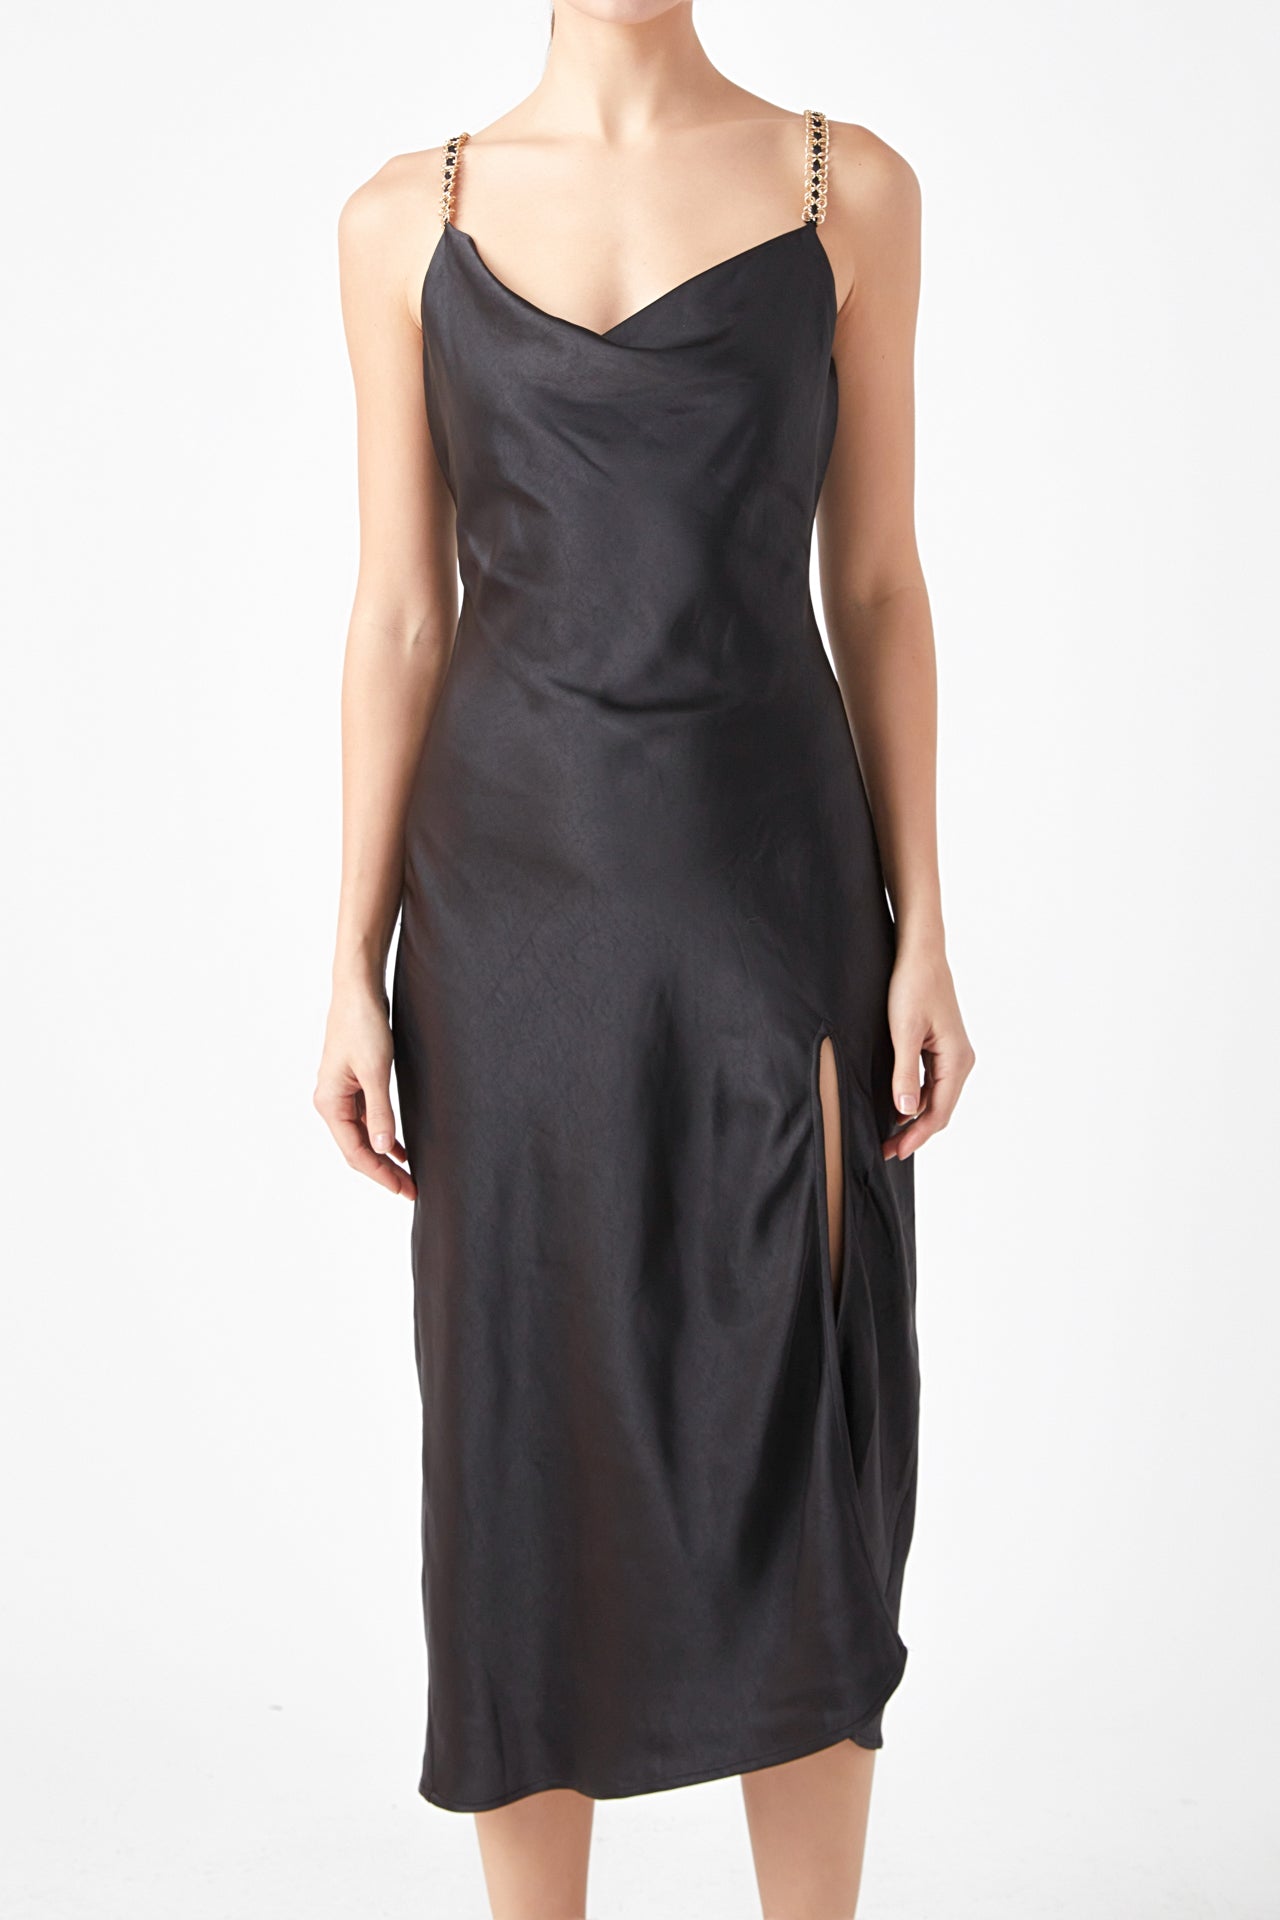 ENDLESS ROSE - Midi Satin Slip Dress - DRESSES available at Objectrare